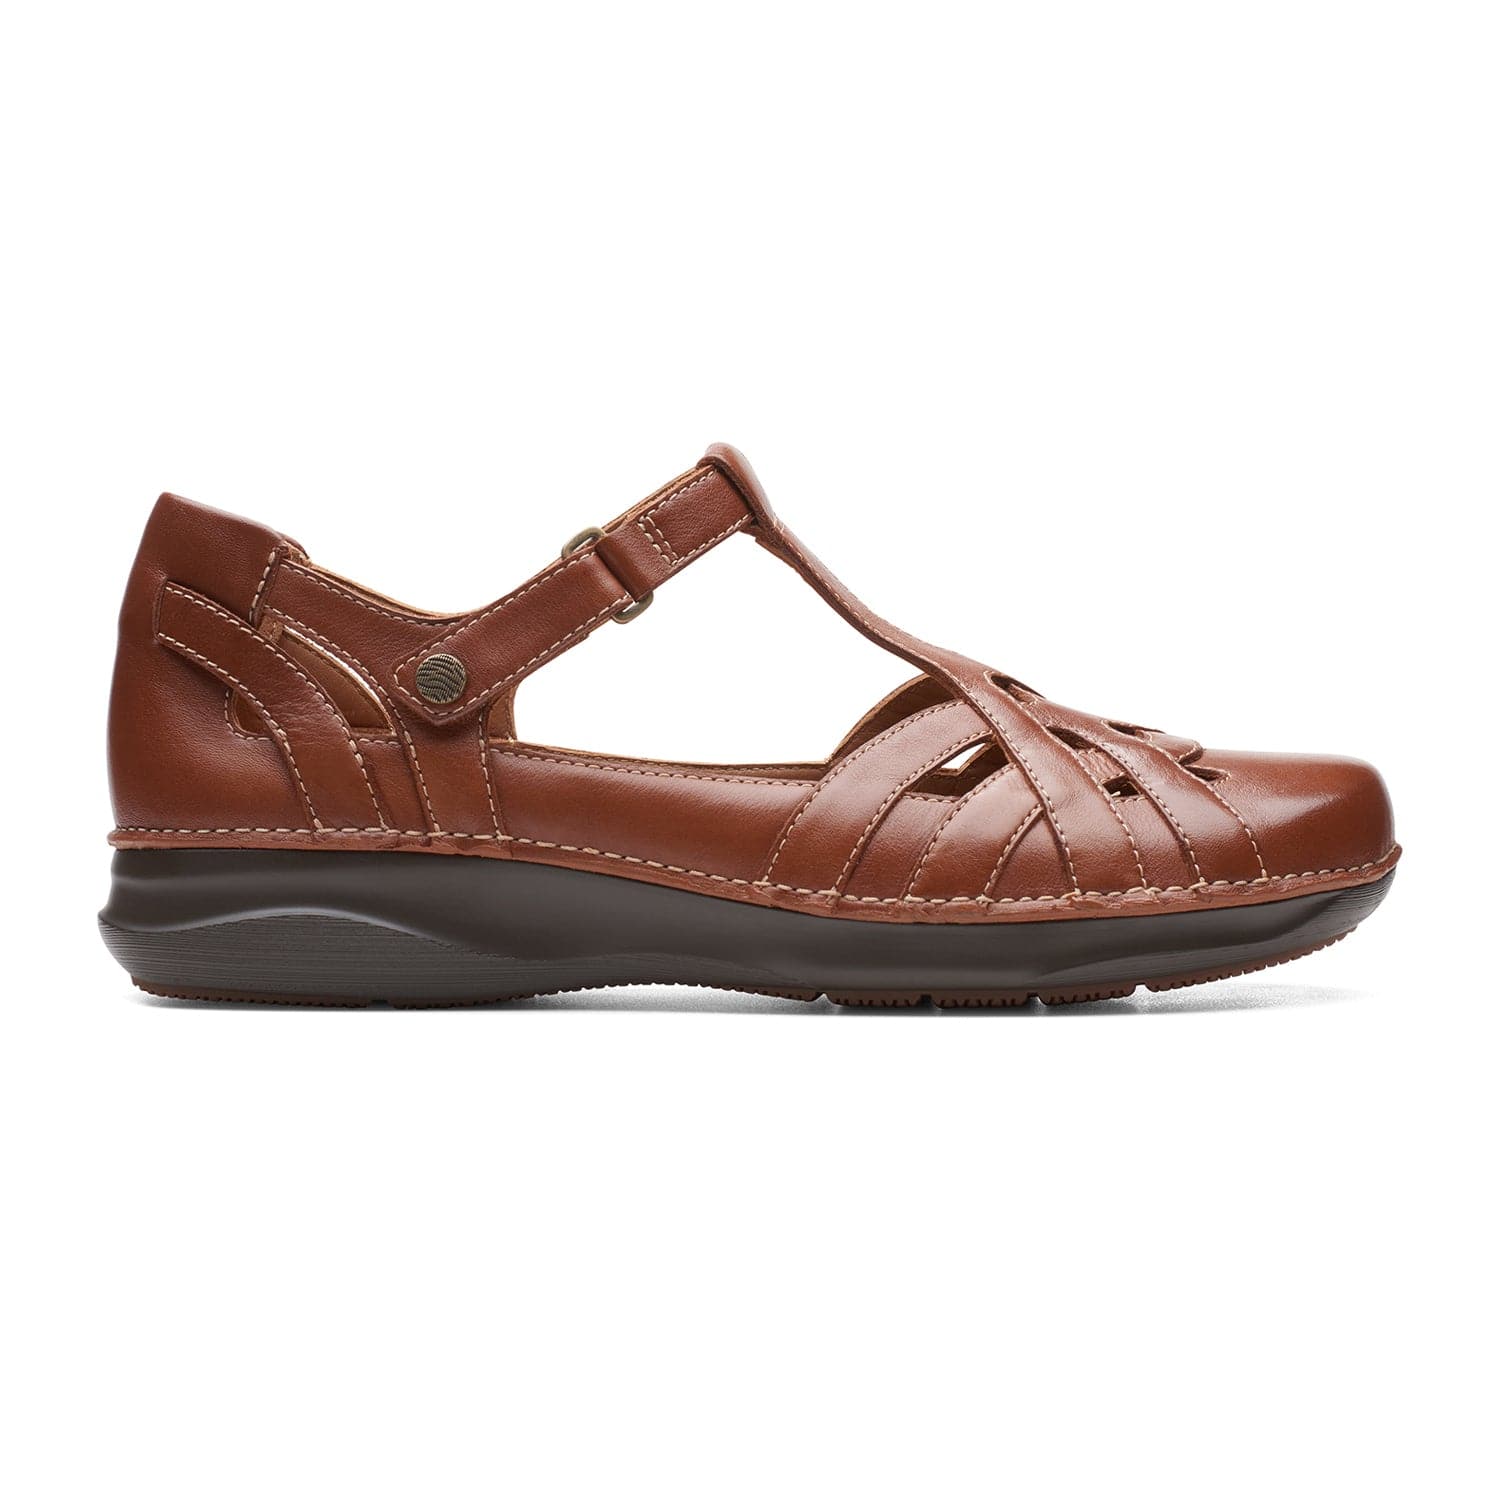 Clarks Appley Way Shoes - Dark Tan Leather - 261655295 - E Width (Wide Fit)